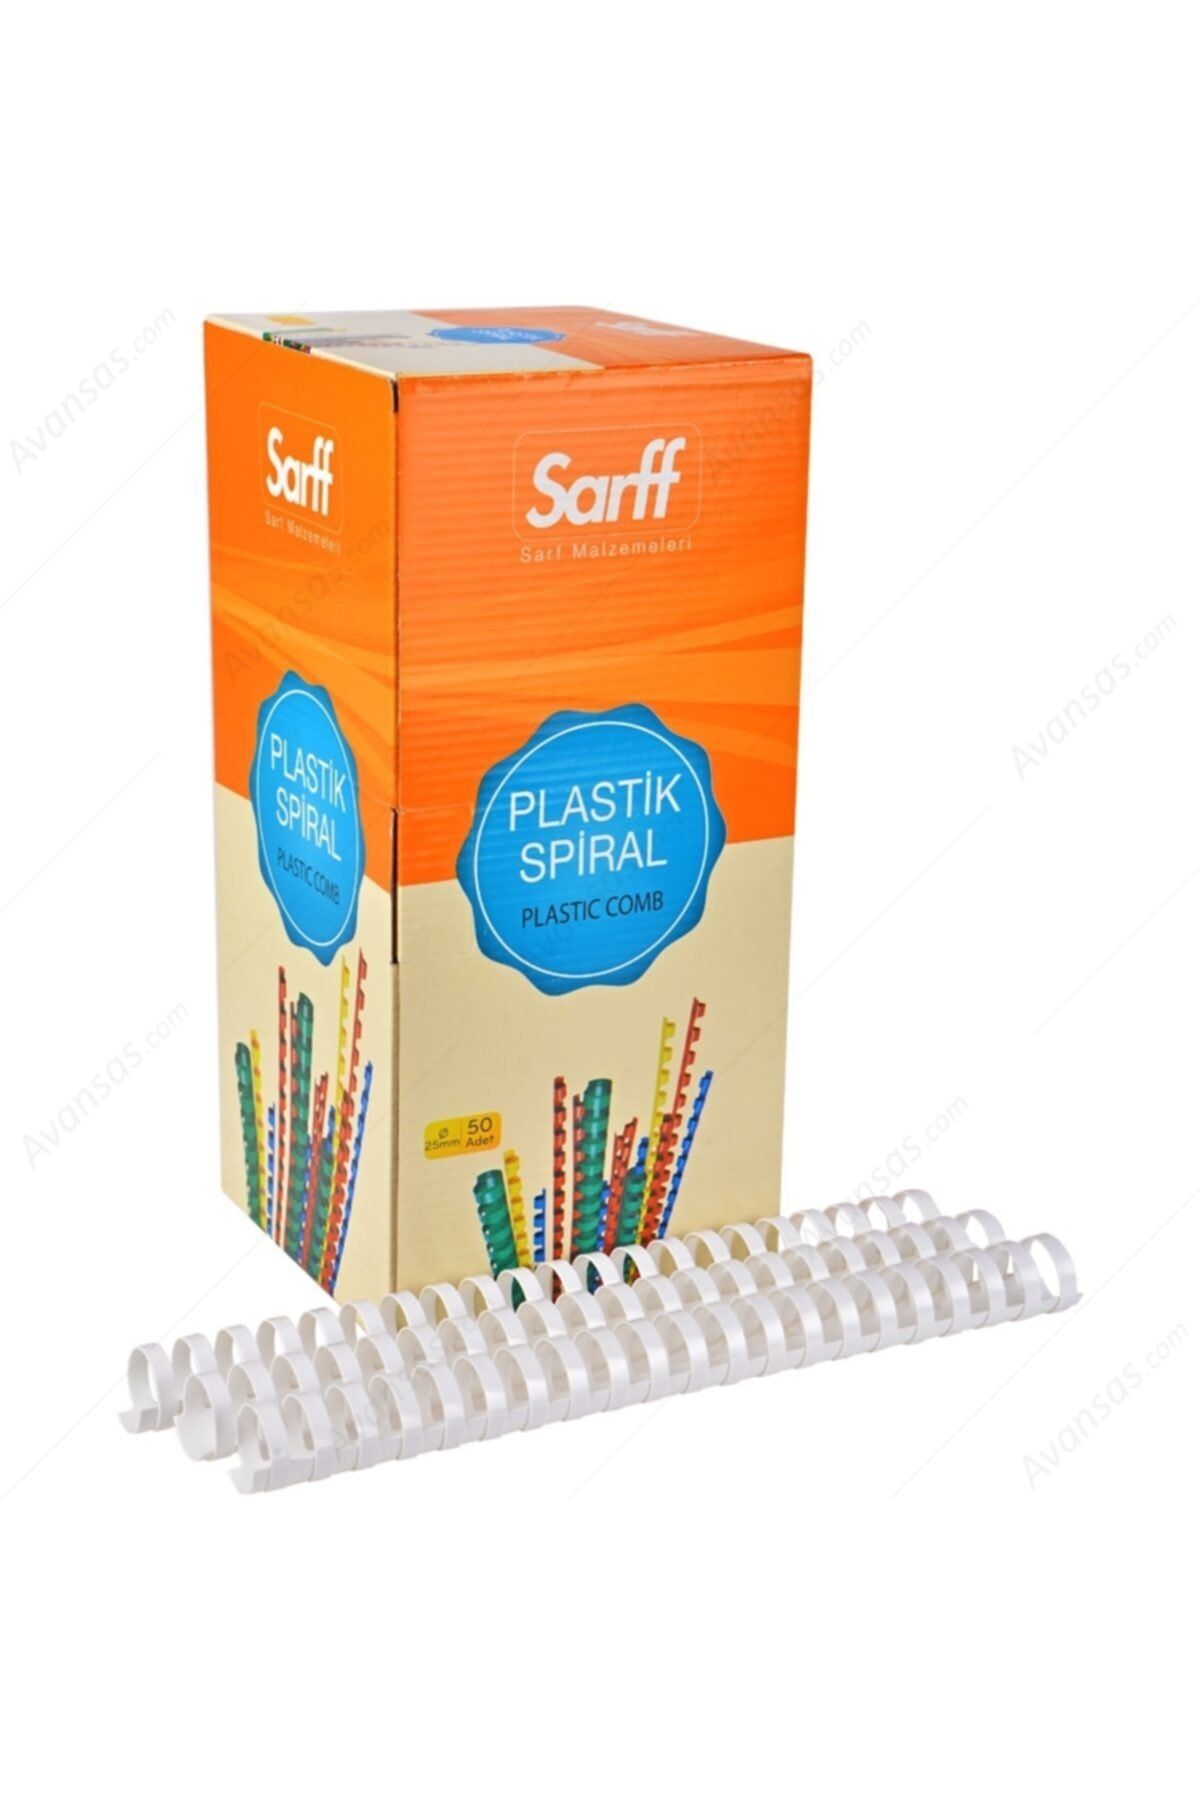 SARFF Plastik Spiral 16 Mm Beyaz 100 Lü (1 Paket 100 Adet)